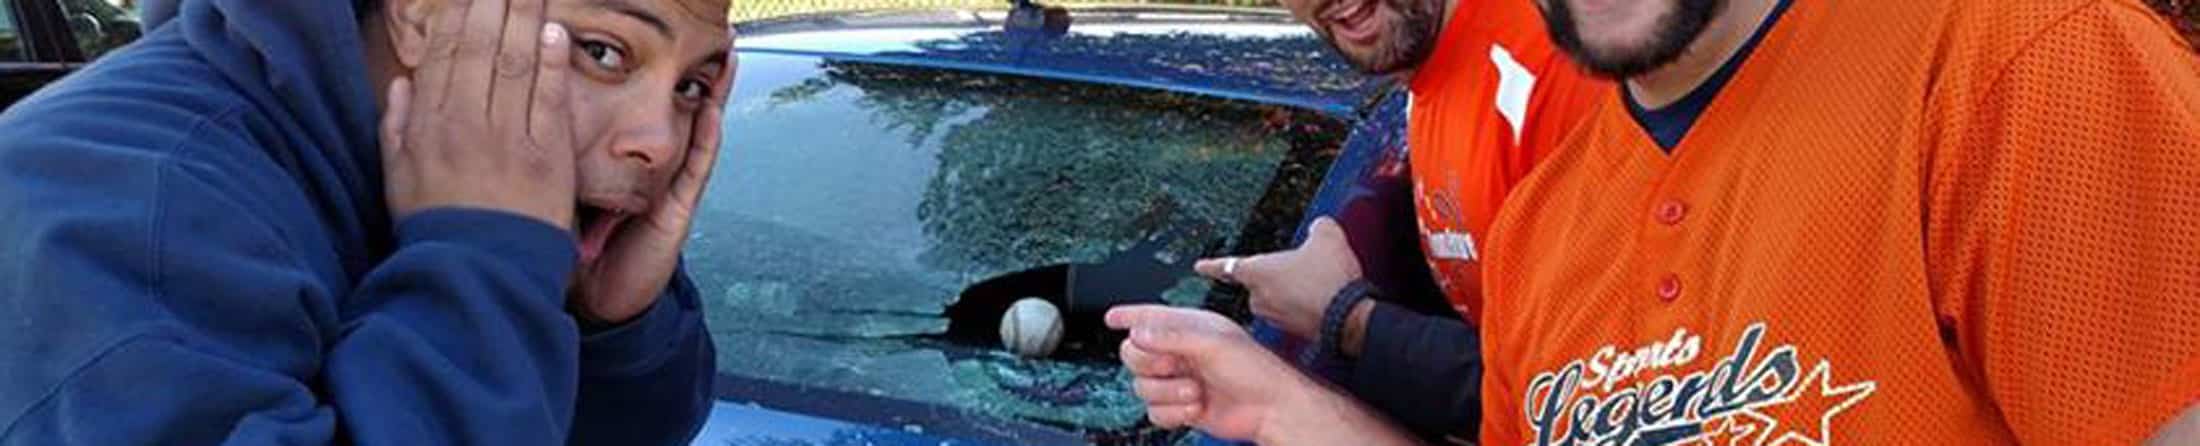 Baseball breaks car windshield glass - header